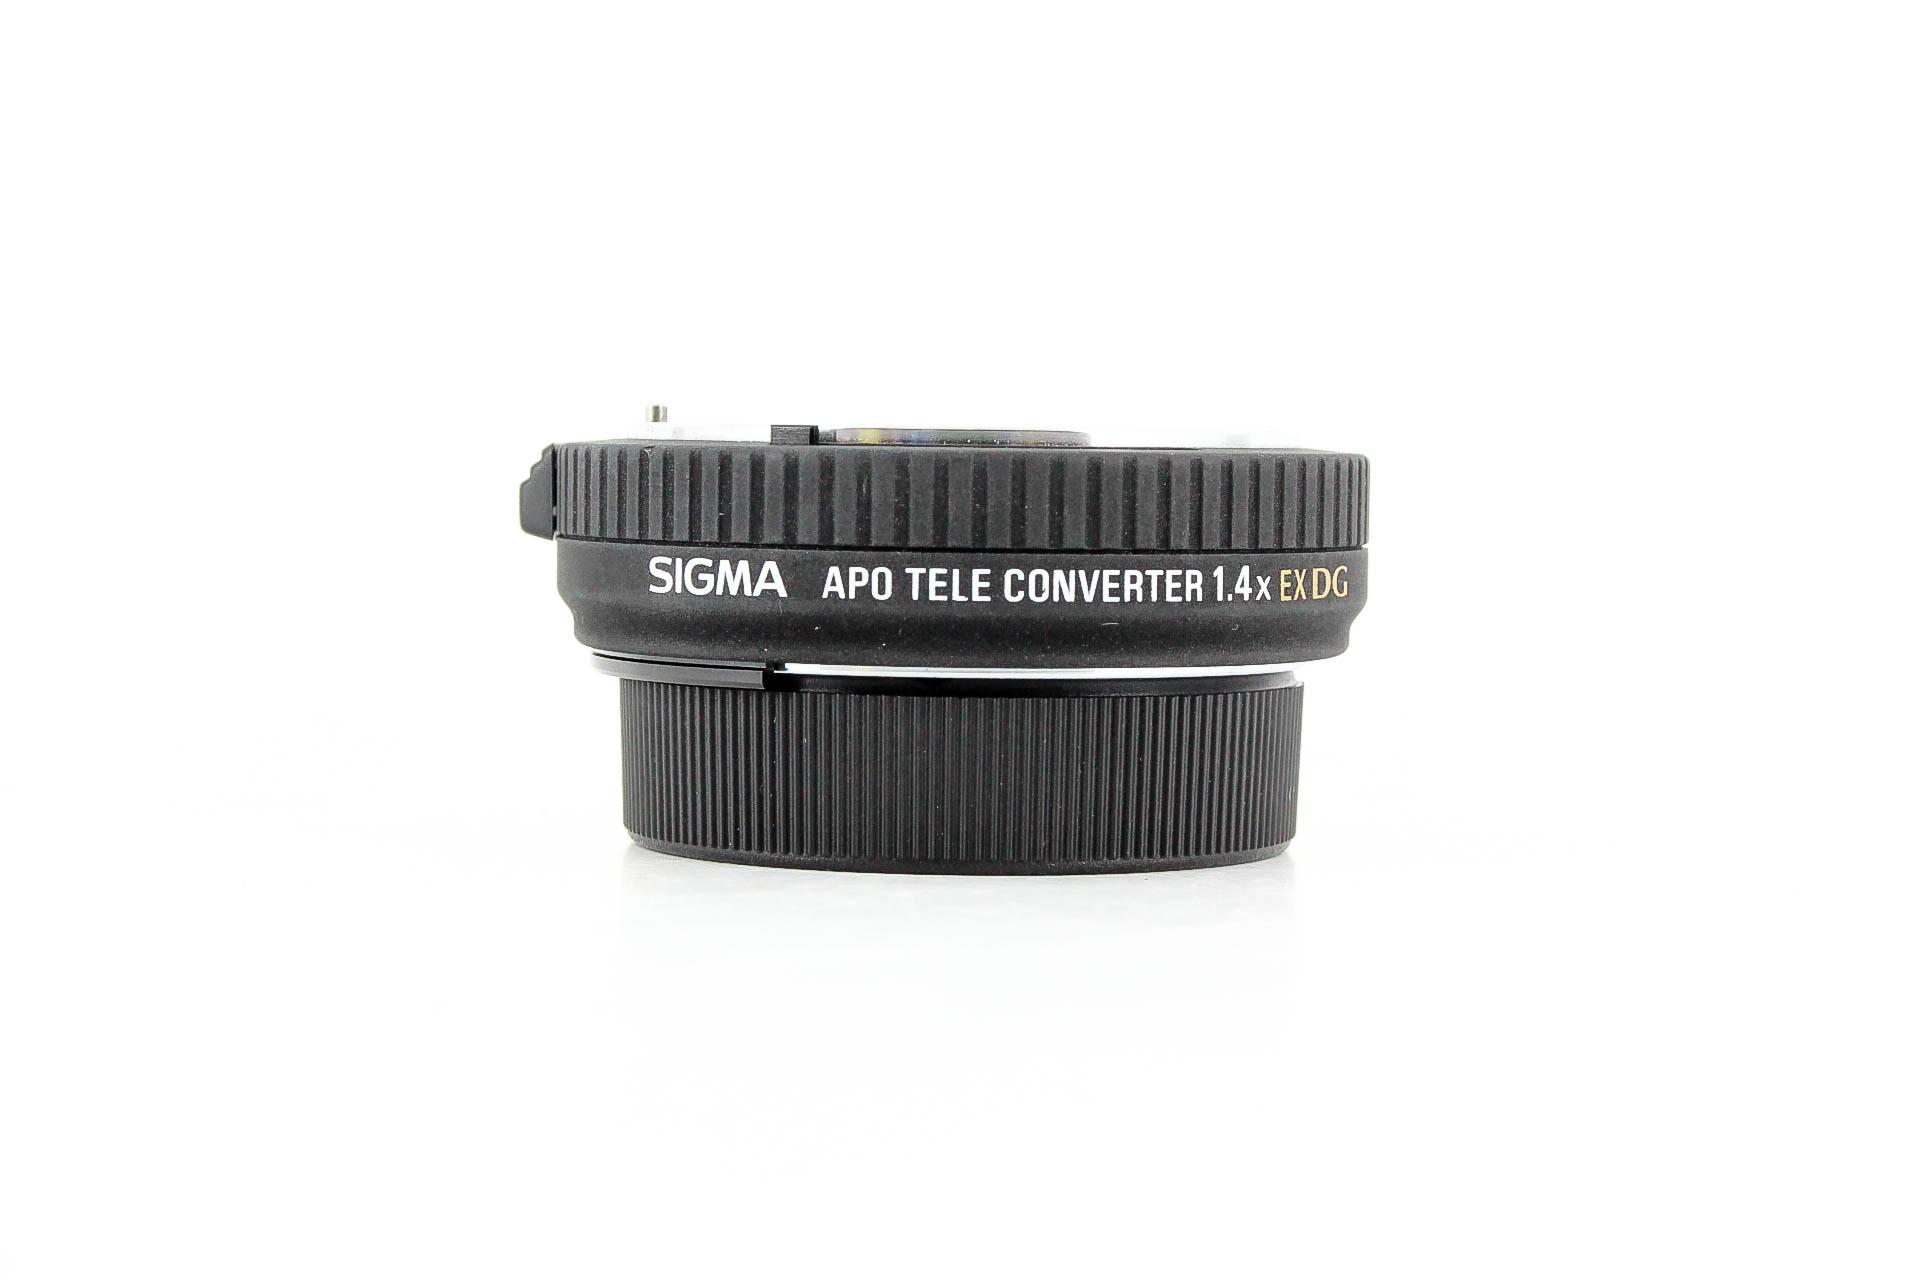 SIGMA APO TELE CONVERTER 1.4X EX DG ニコン用 - レンズ(単焦点)